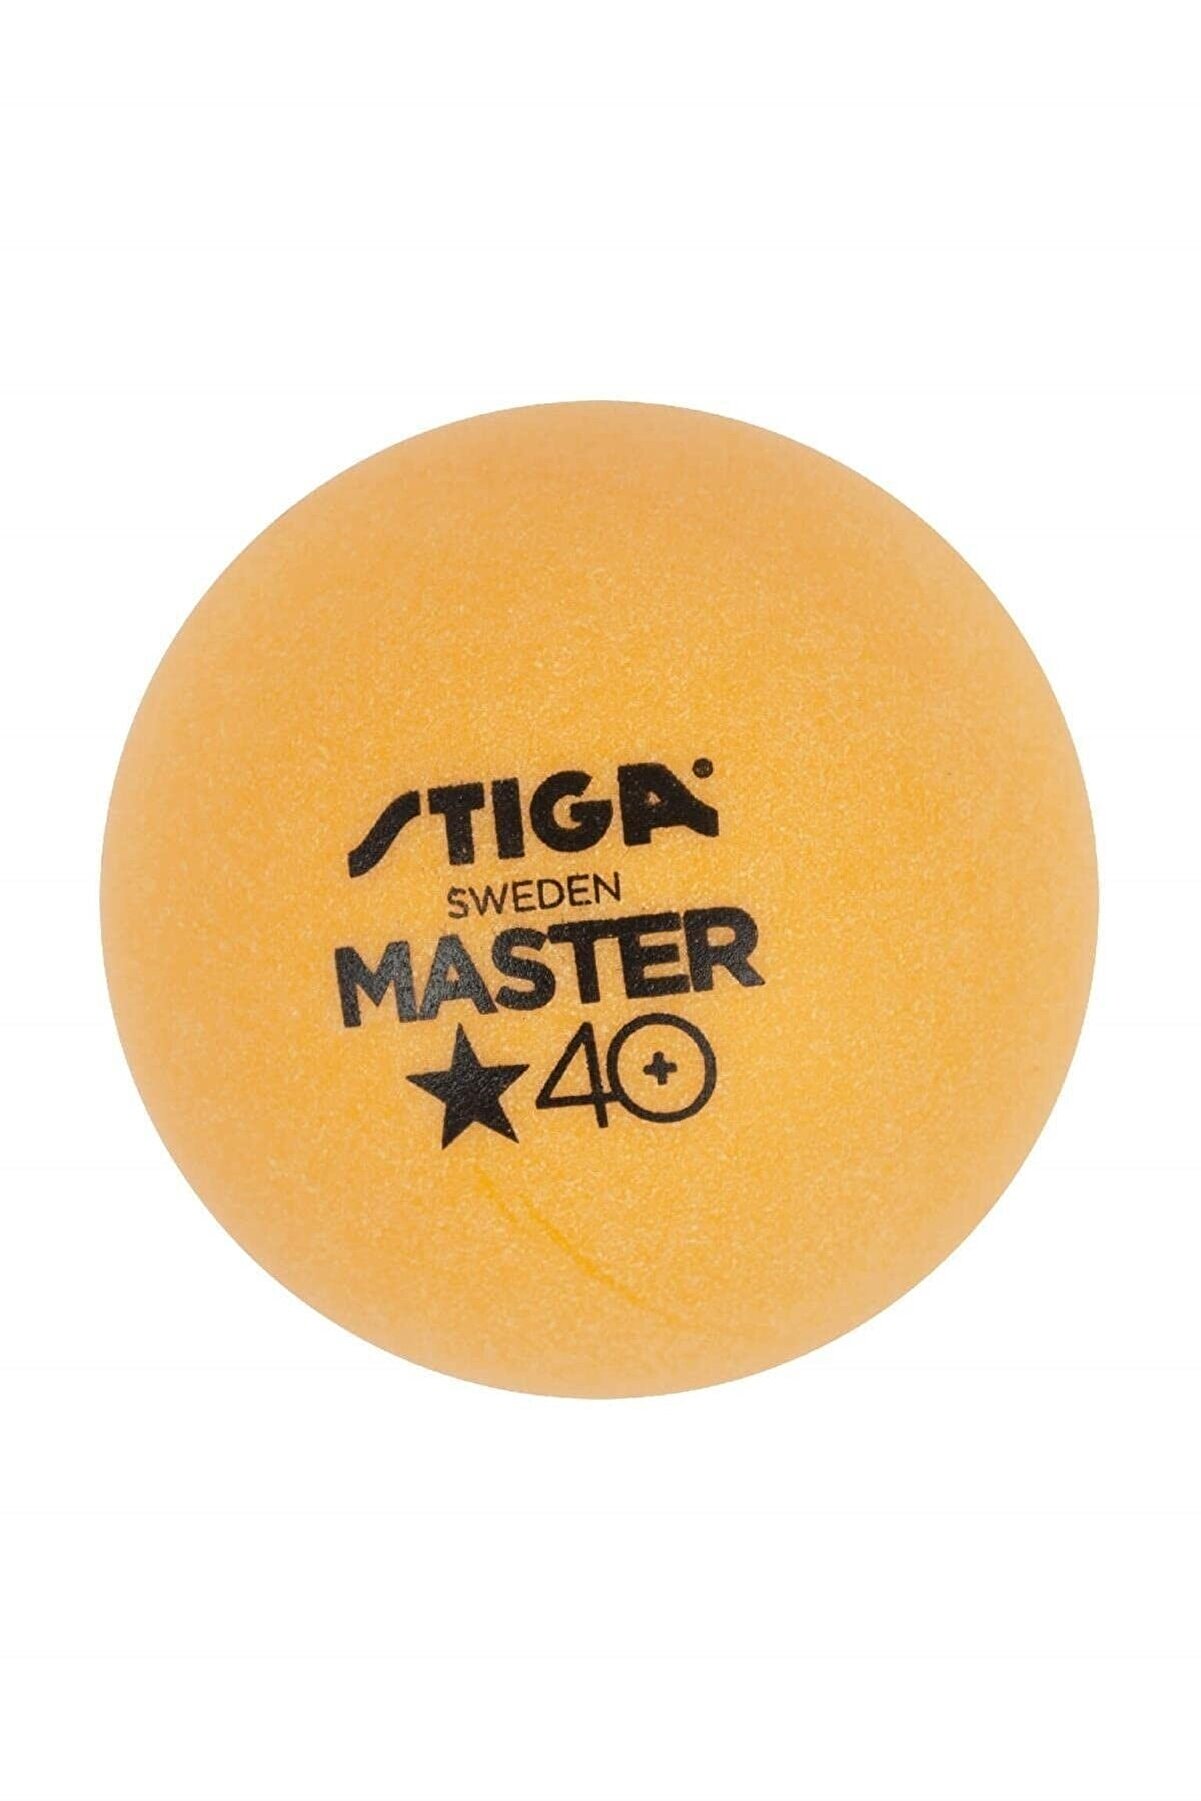 Stiga Master 40+ 1 Yıldız Hobi 6'lı Masa Tenisi Topu Pinpon Turuncu